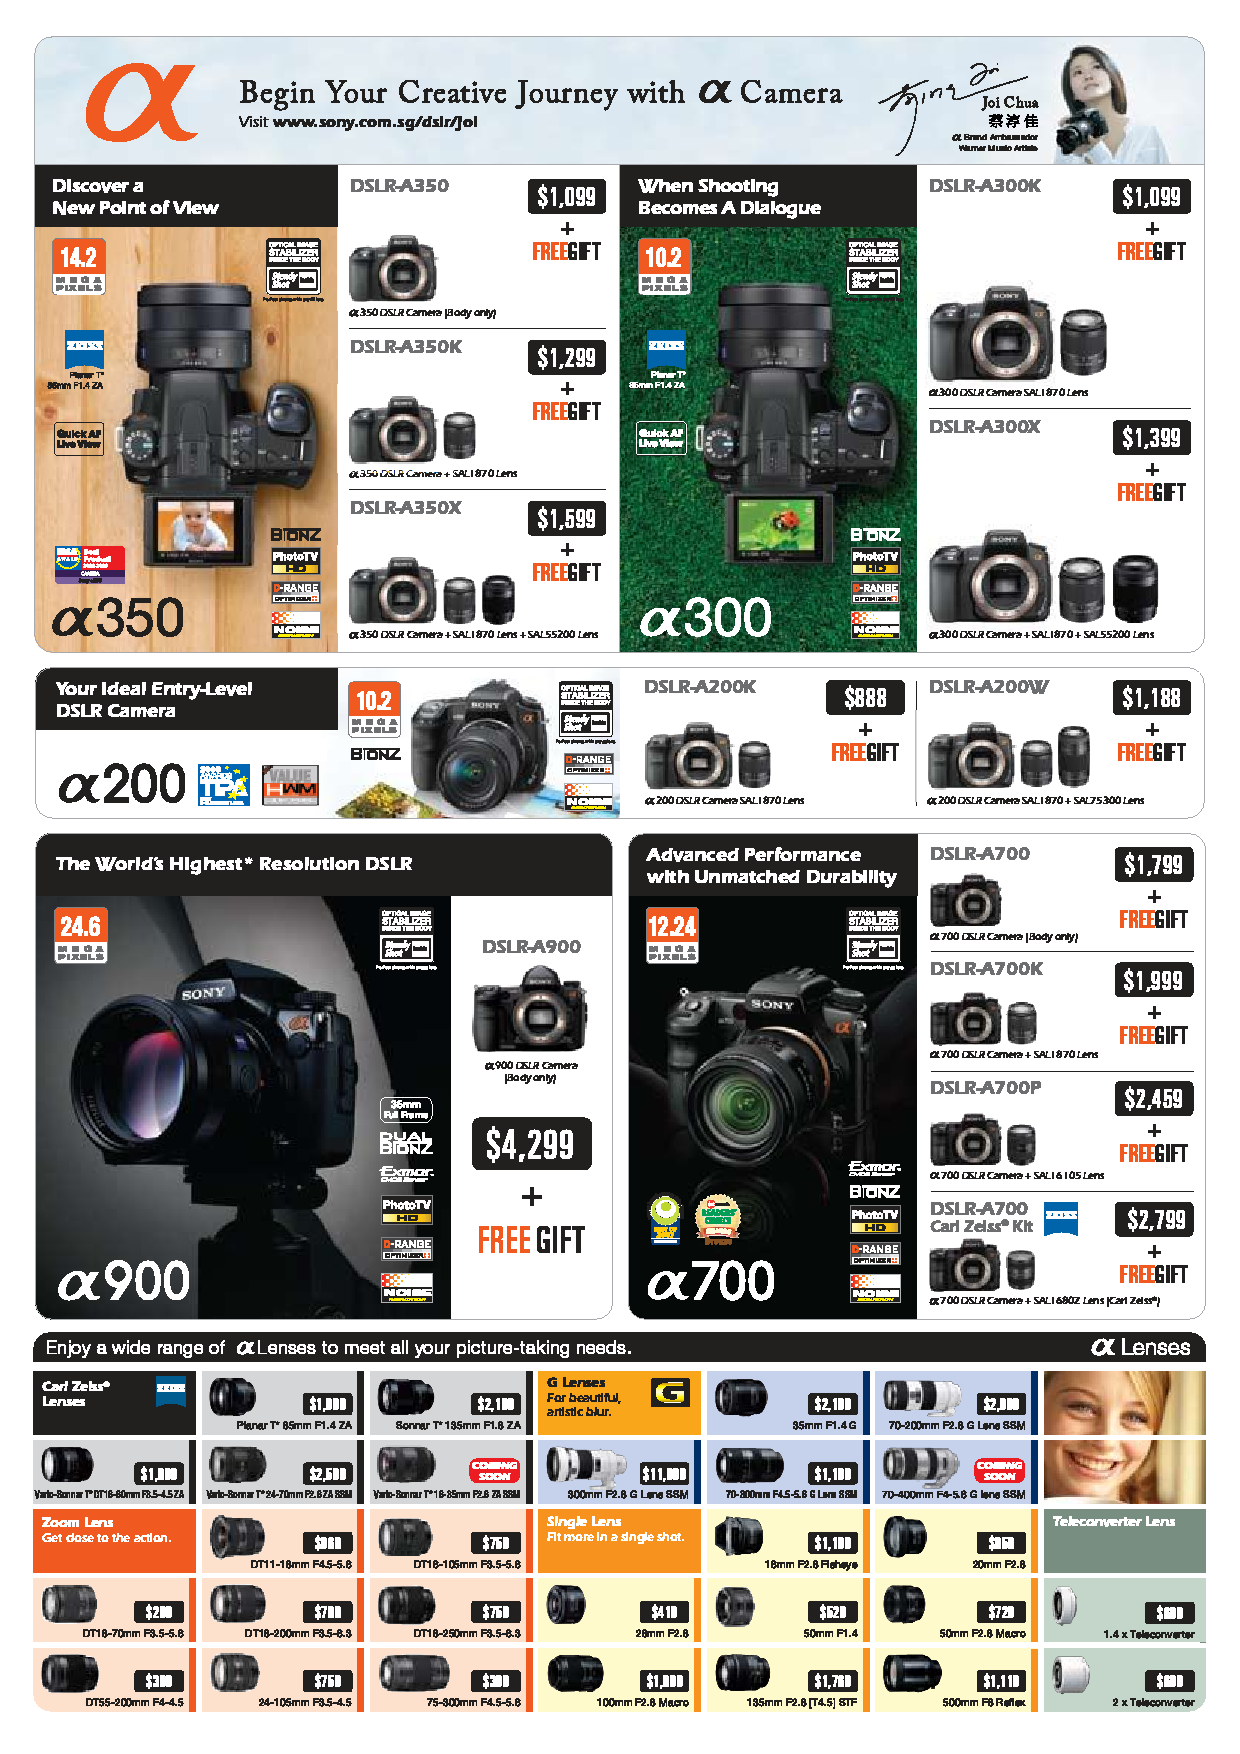 Sitex 2008 price list image brochure of Sony Dslr